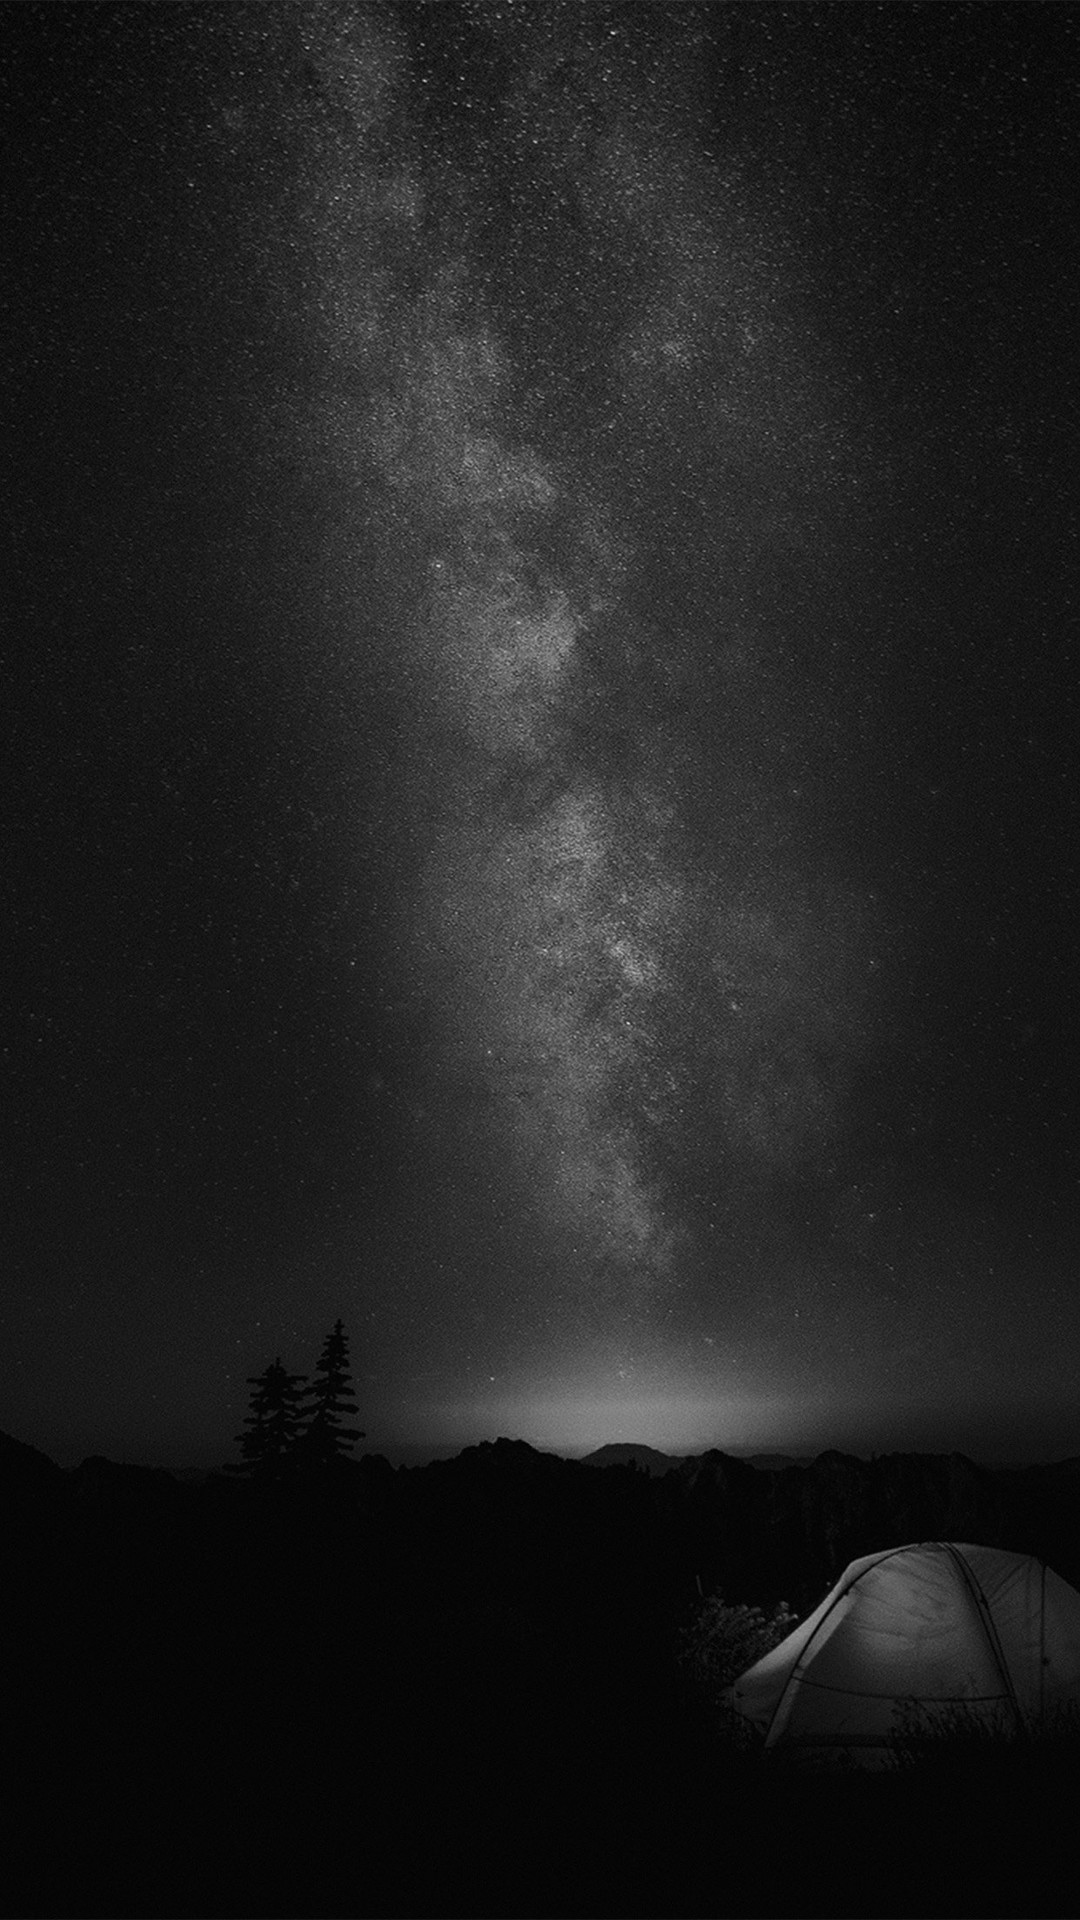 1080x1920 Camping Night Star Galaxy Milky Sky Dark Space Bw iPhone 8 wallpaper